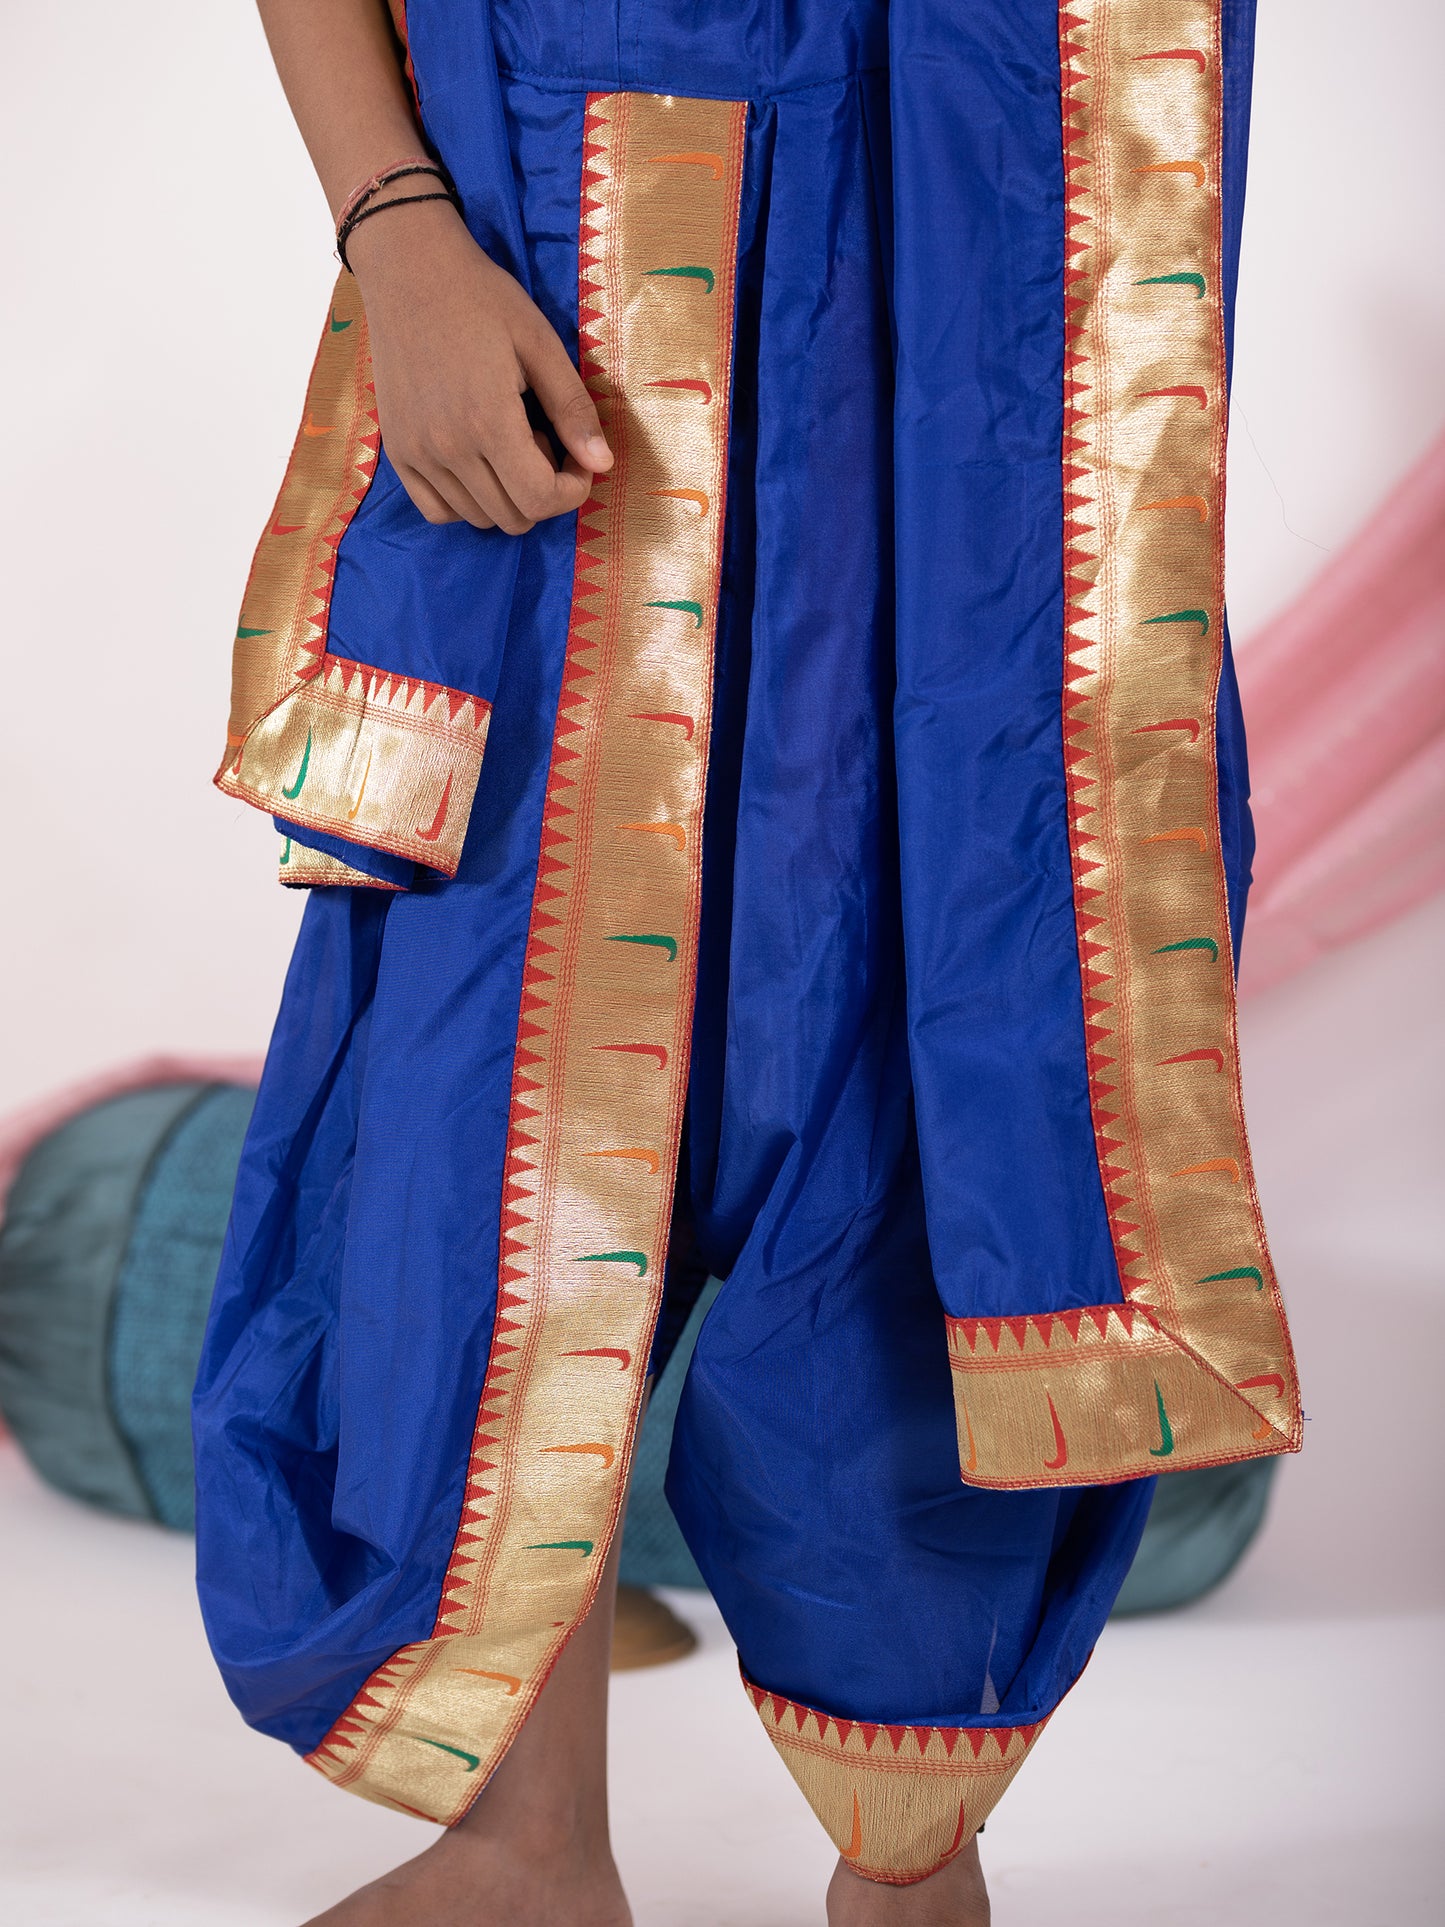 royal blue silk Sovale uparane dhoti jari Shawl ethnic traditional dhoti-upavastra pooja dhoti jari gamcha with Paithani jari border for munj thread ceremony vratabandha upanayanam for kids